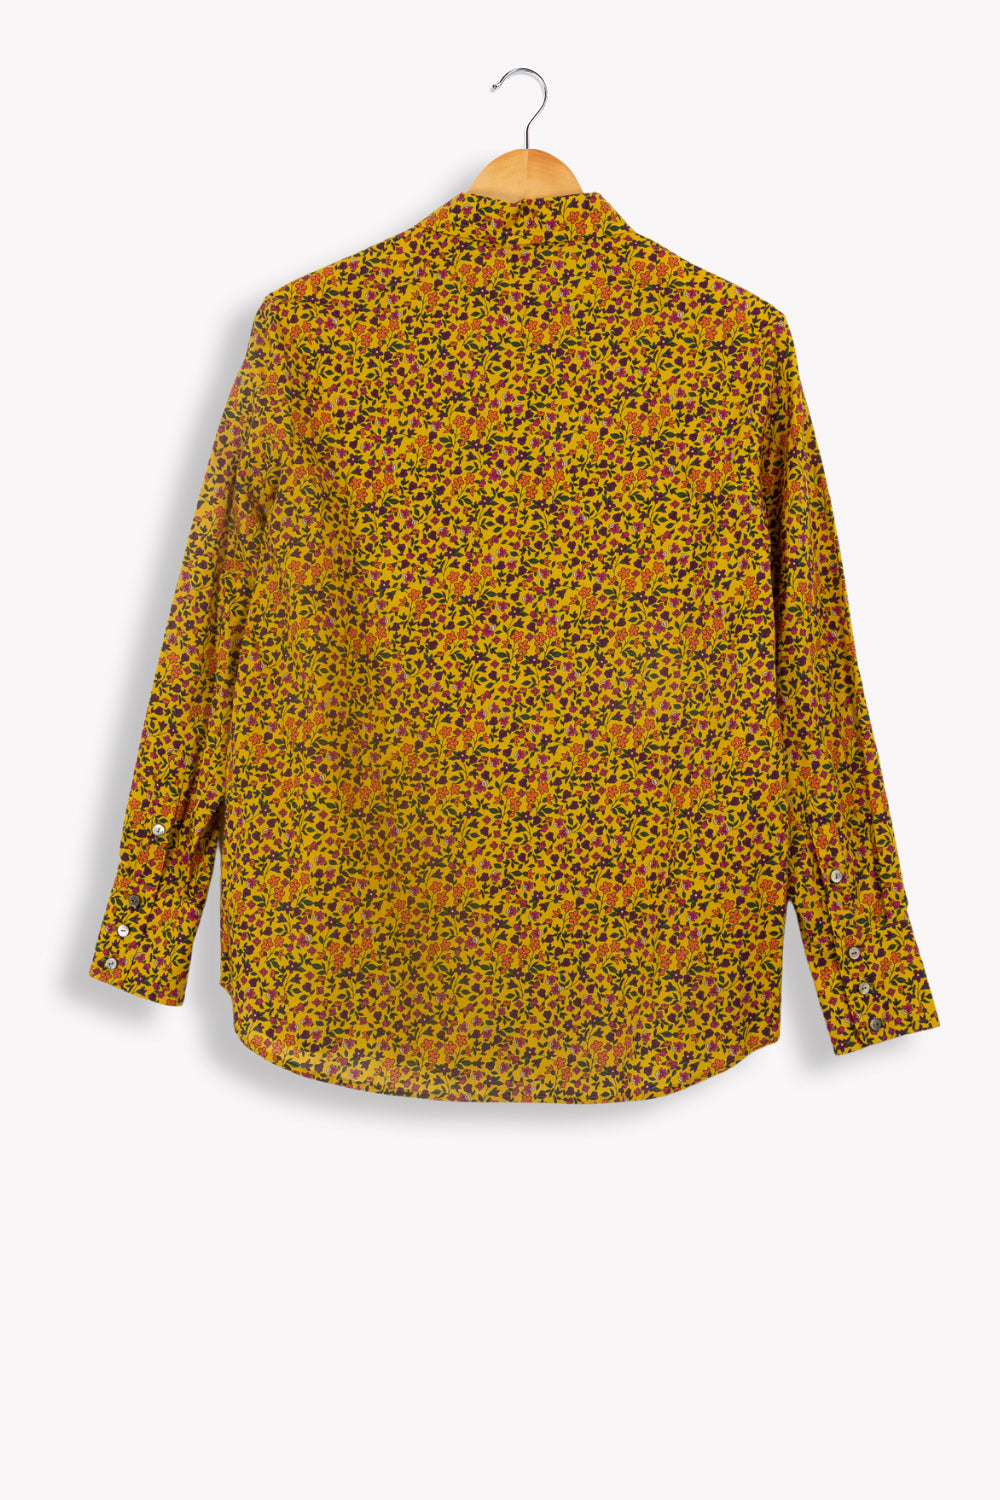 Chemise Maureen jaune à fleurs - 34